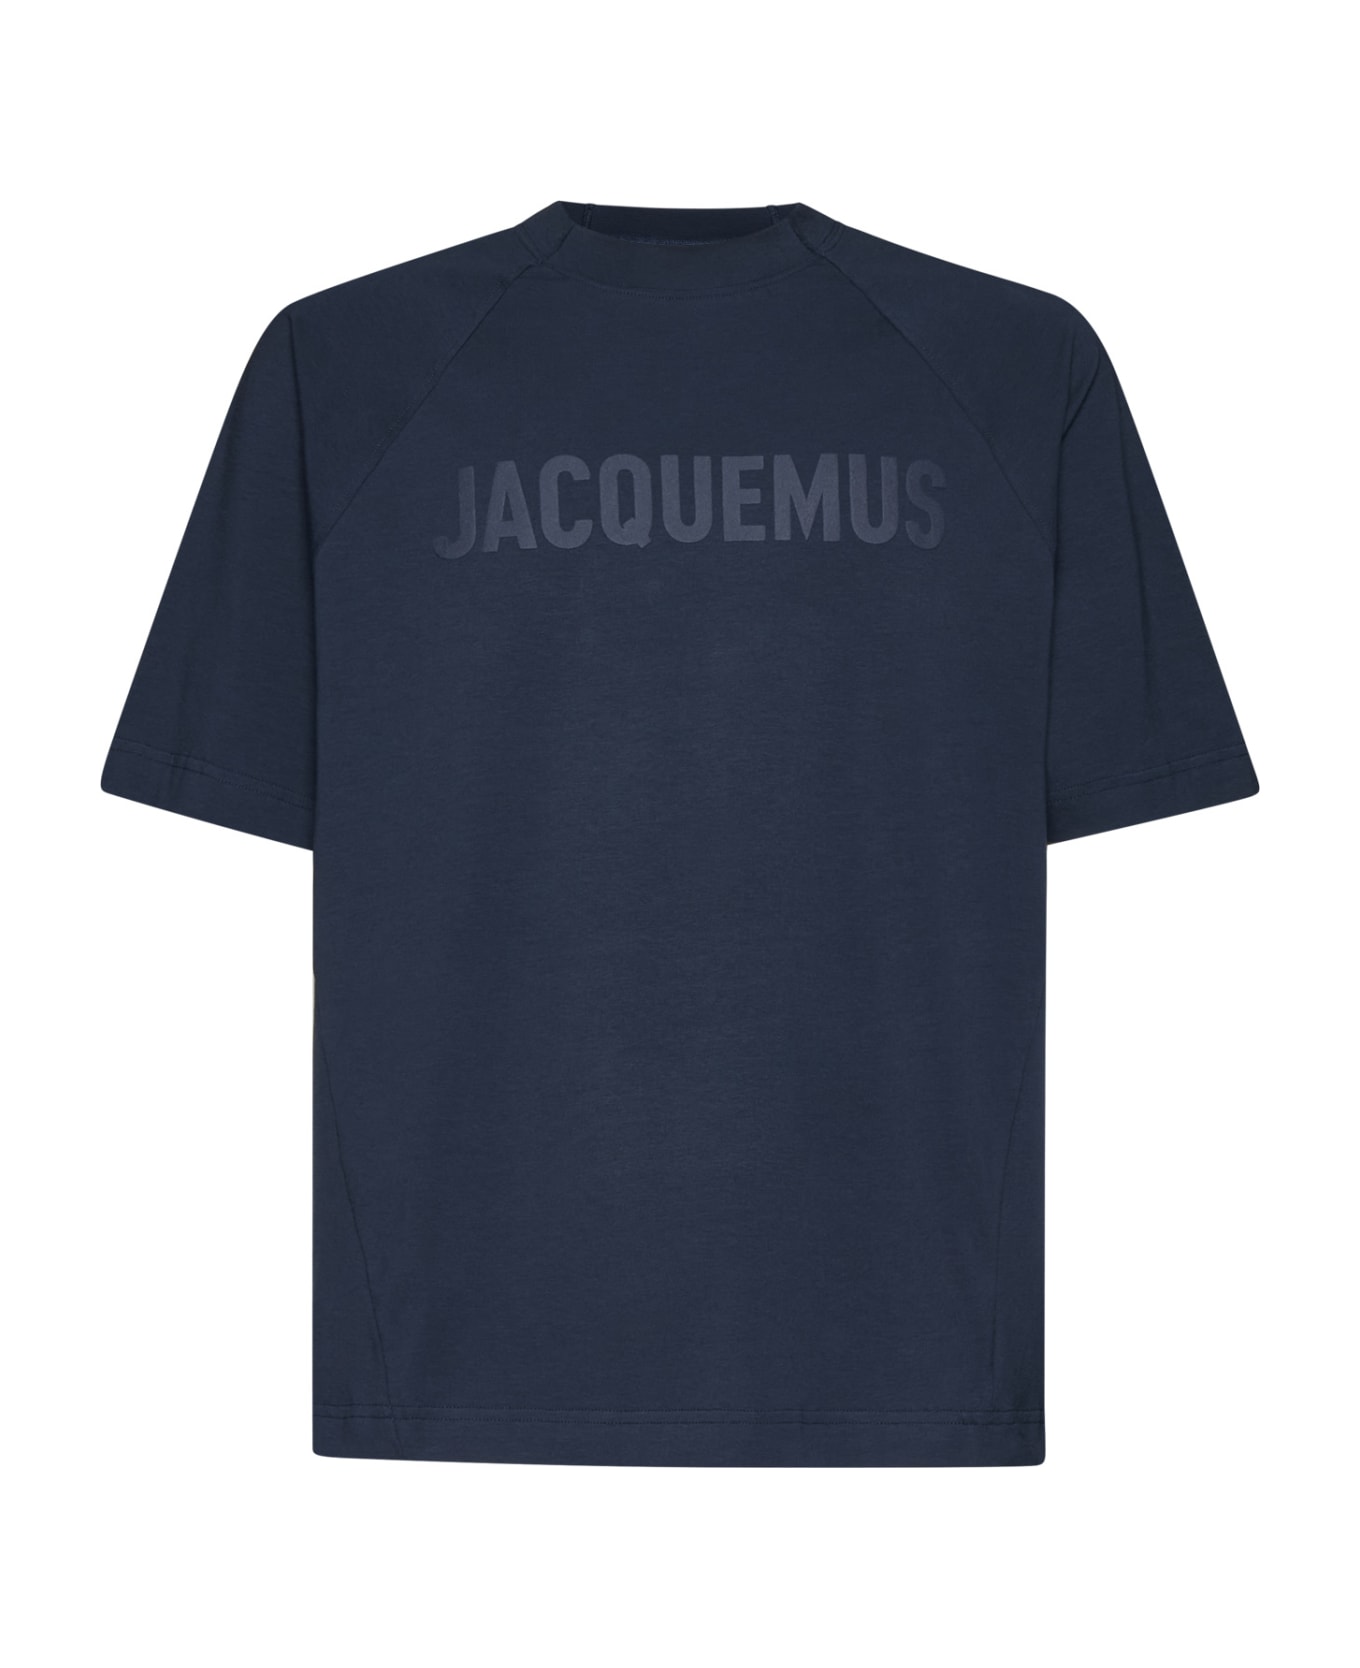 Jacquemus Typo Crewneck T-shirt - Dark navy シャツ